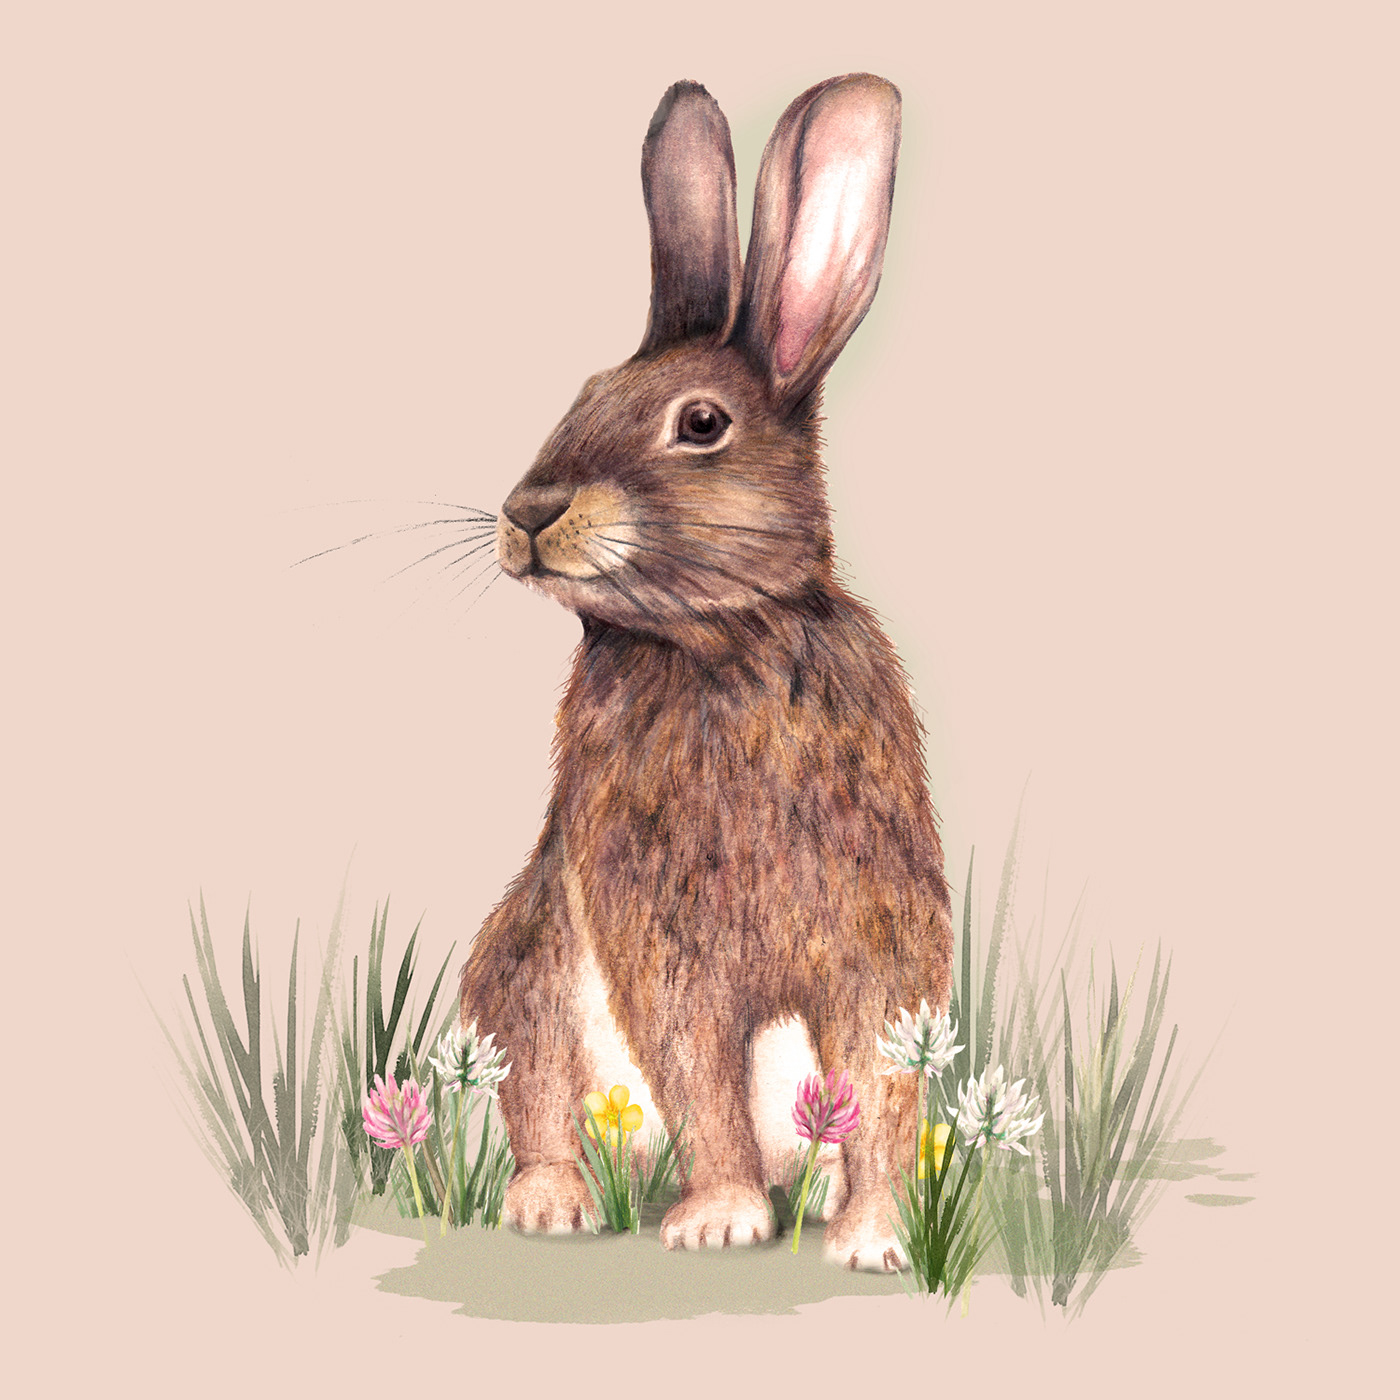 watercolour ILLUSTRATION  rabbit cute bunny countryside animals animals animal illustration nature illustration